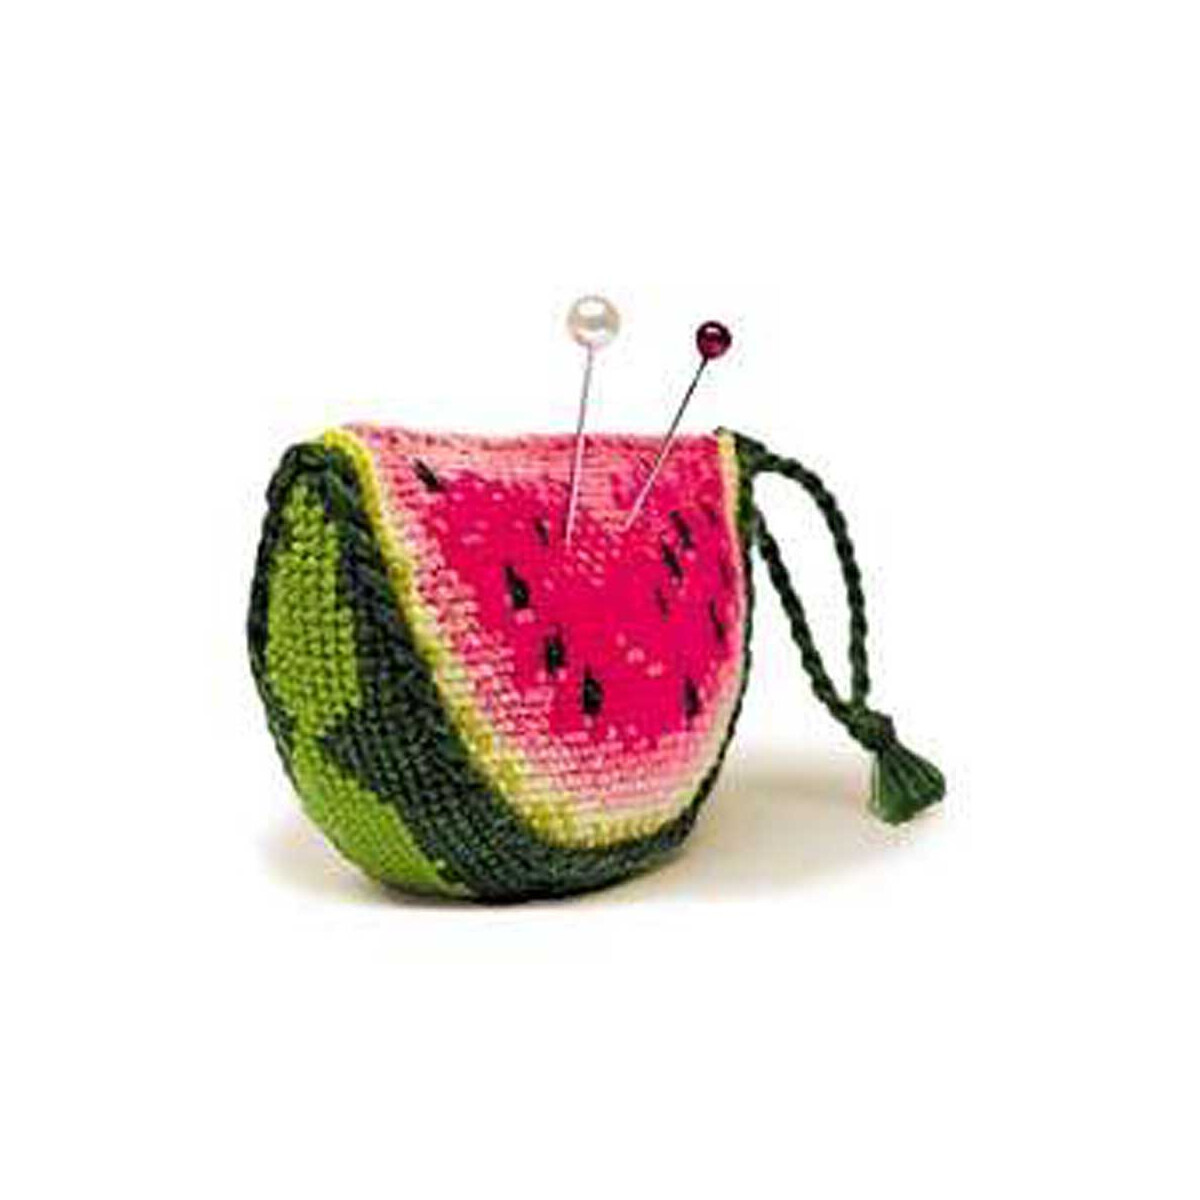 Prym Love Watermelon Pin Cushion and Pattern Weight